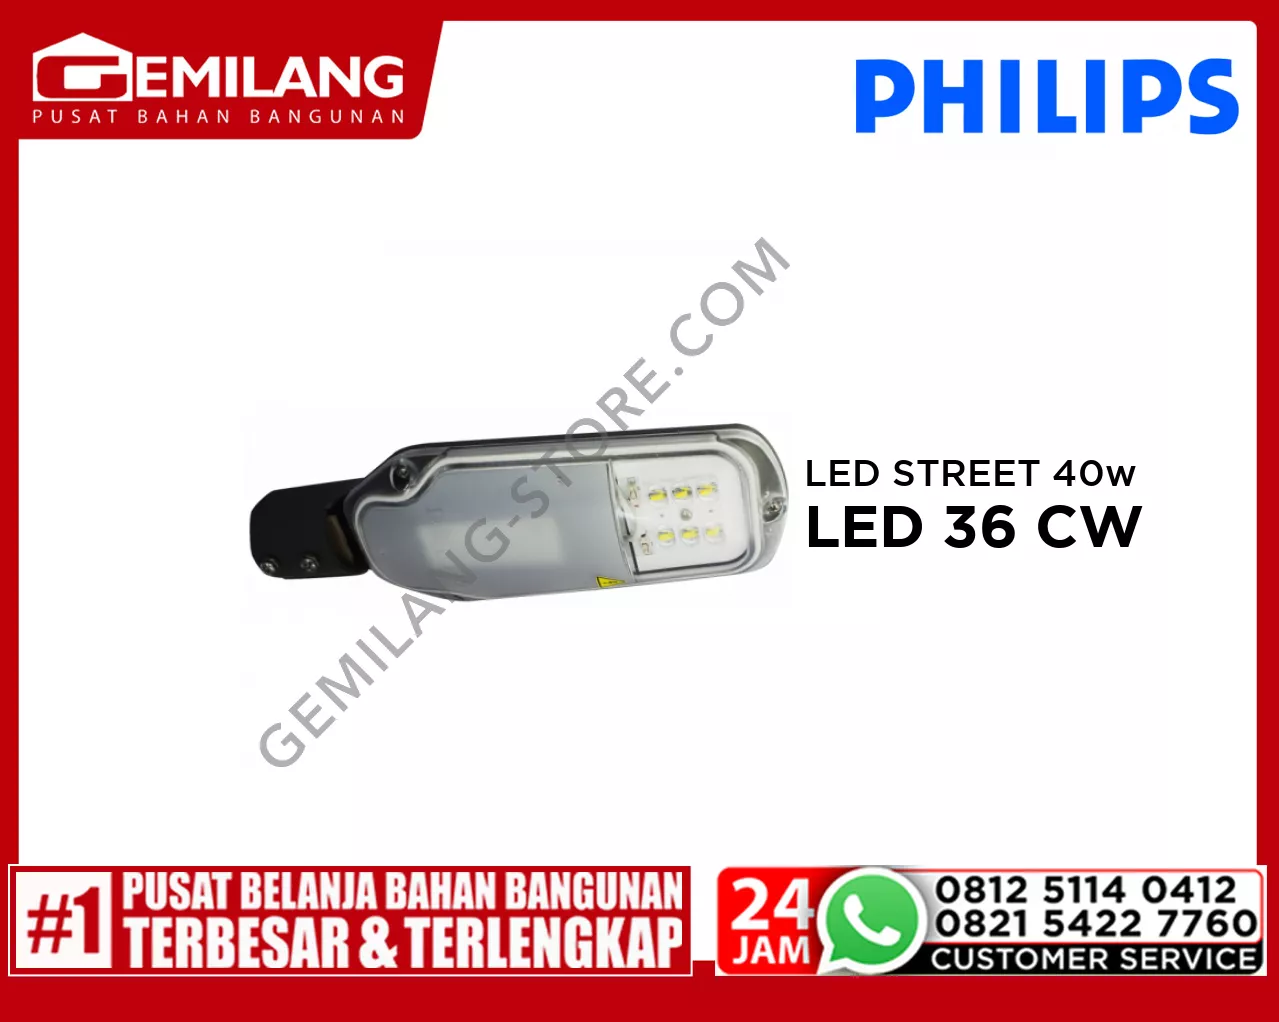 PHILIPS LED STREET LIGHT BRP052 LED 36 CW 40w SLA FG S1 PSU